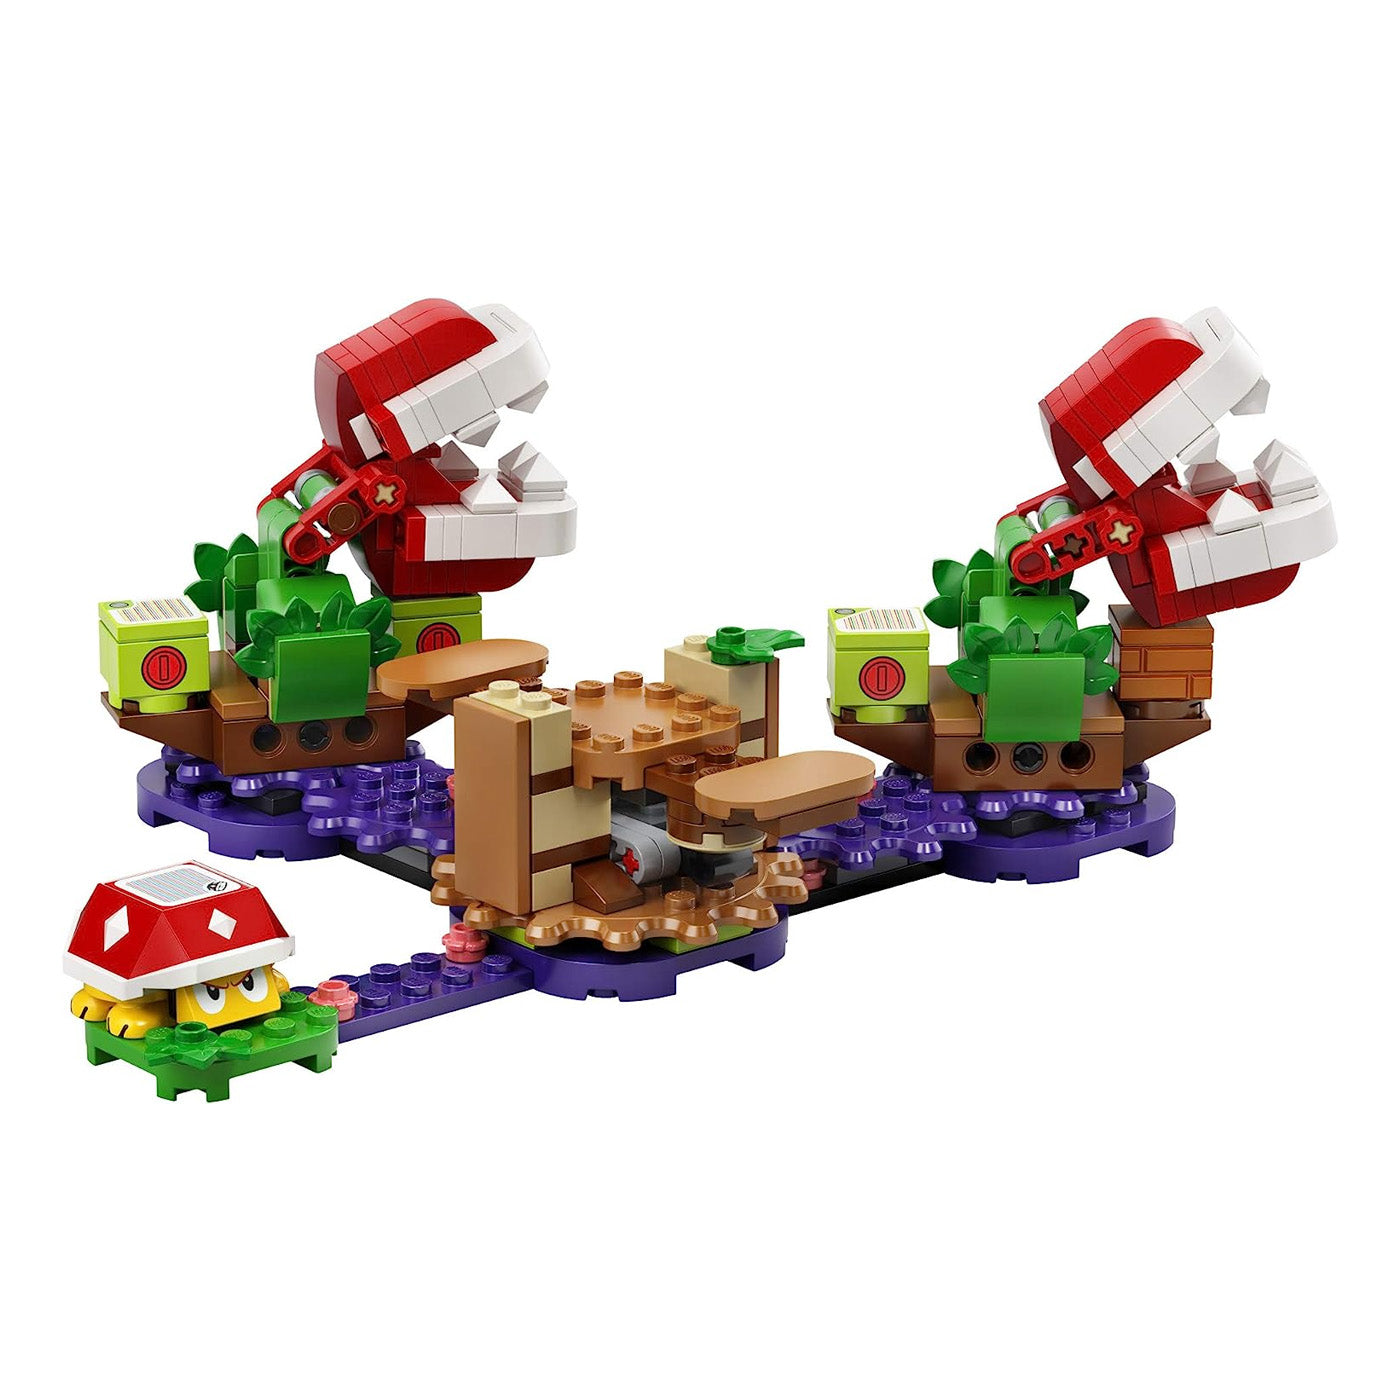 LEGO Super Mario: Piranha Plant Puzzling Challenge Set 71382